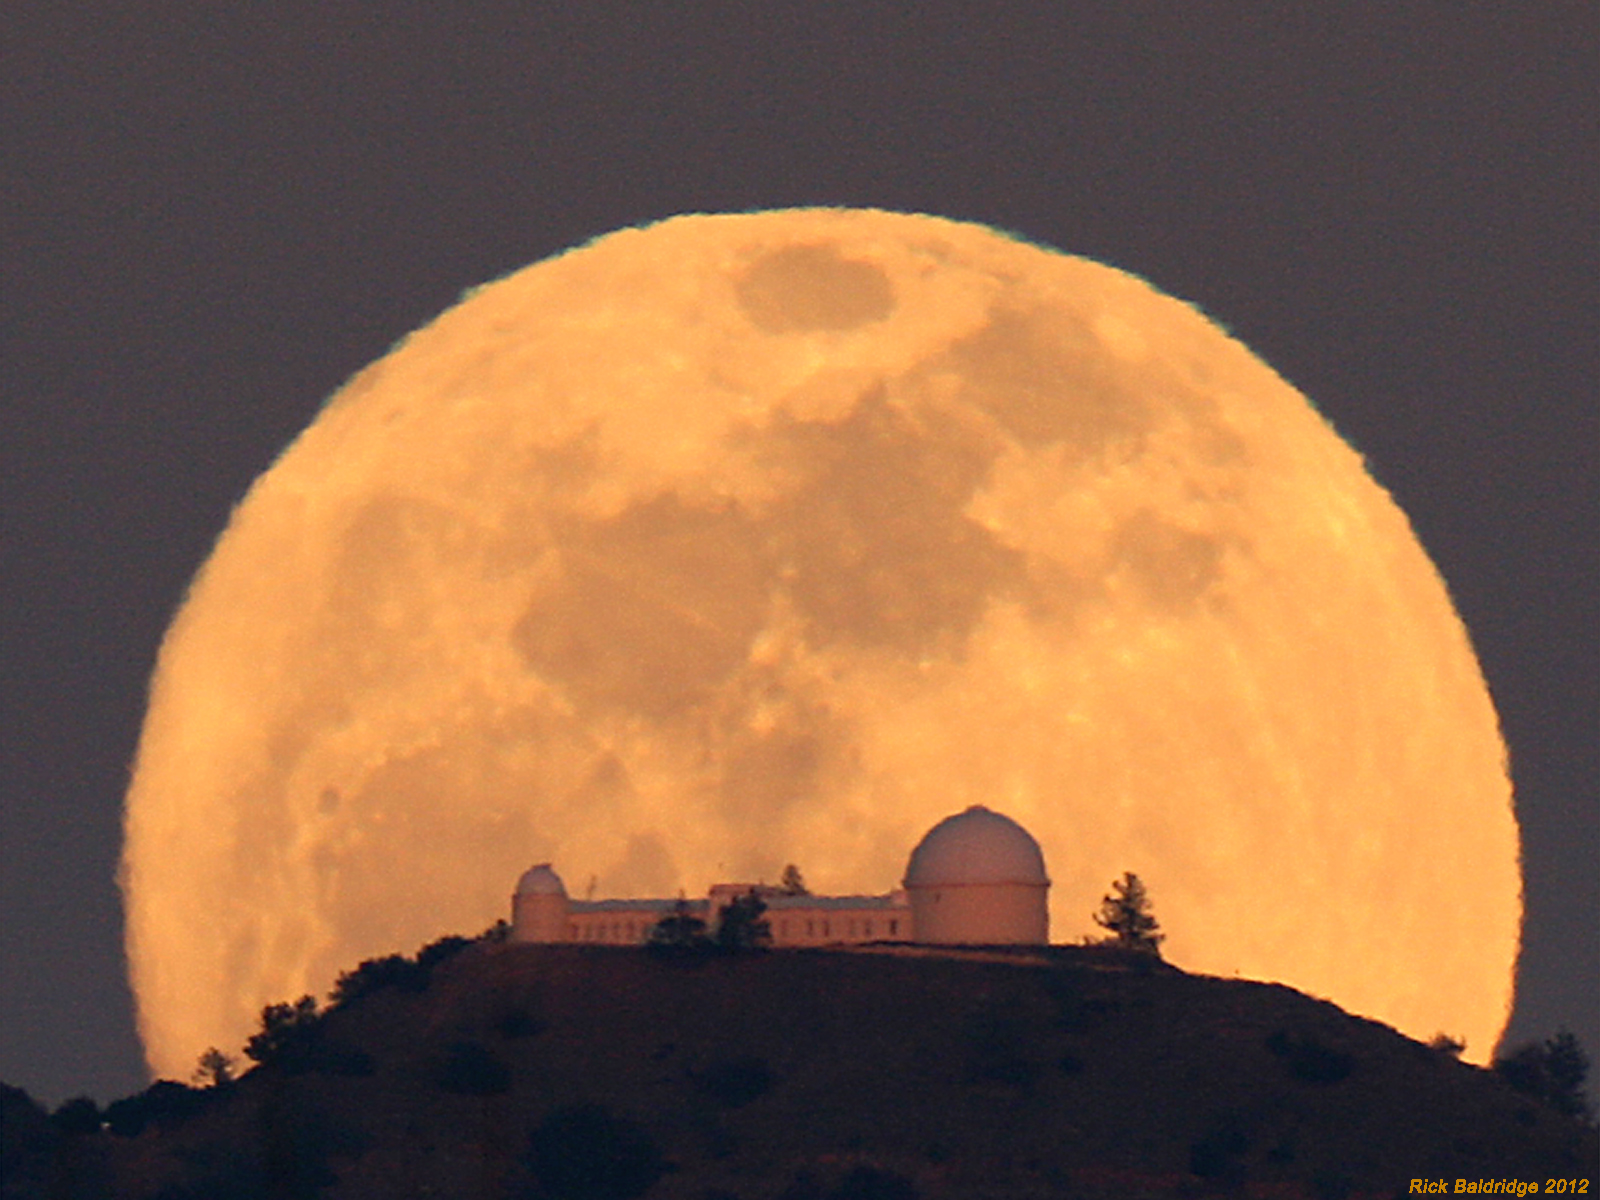 It's Full of Stars — Lick Observatory Moonrise Image Credit...